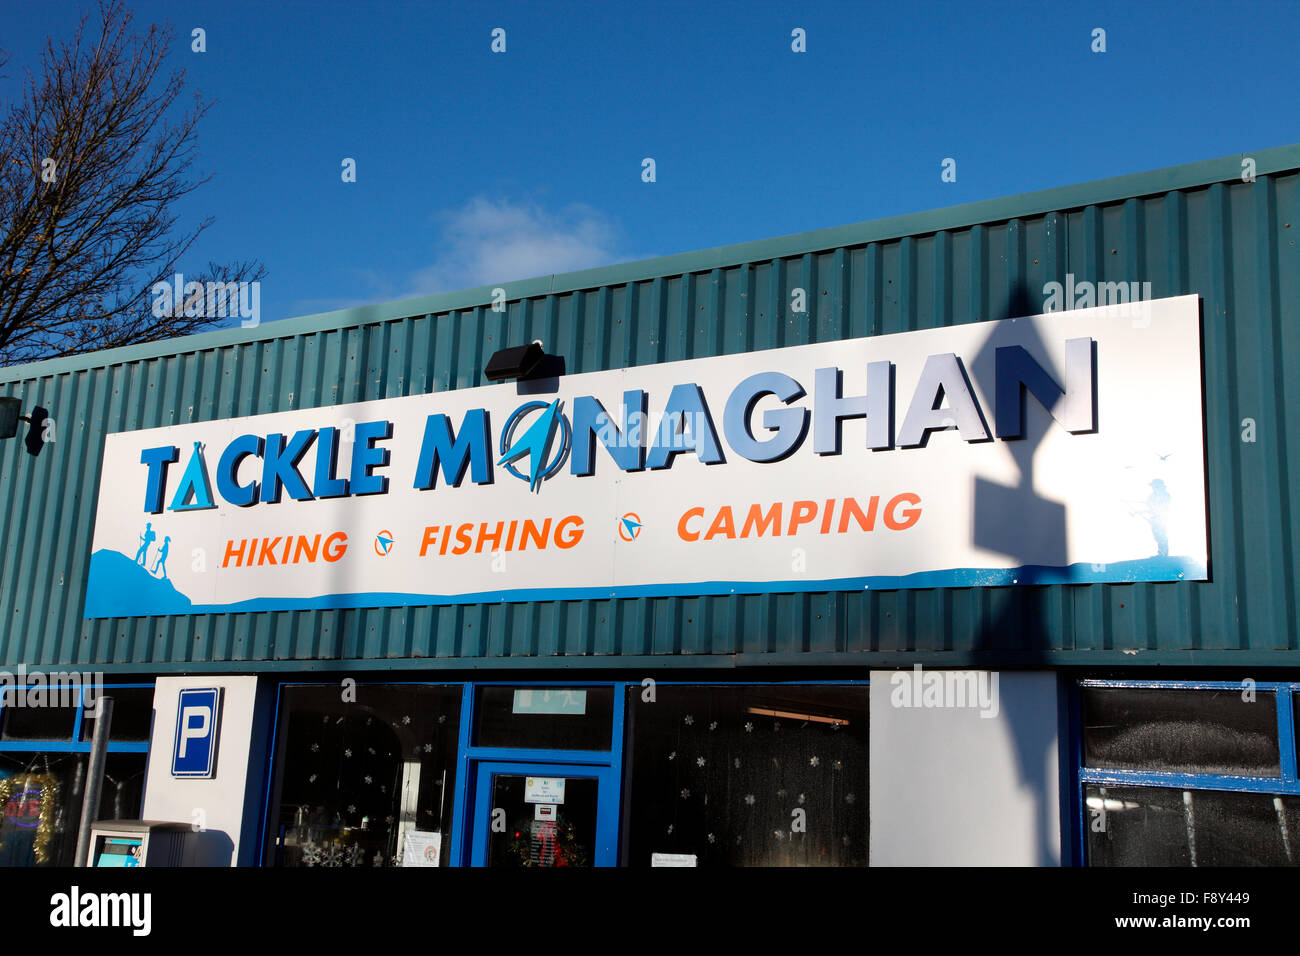 Tackle Monaghan, Outdoor-Aktivitäten-Shop in Monaghan Stadt Stockfoto